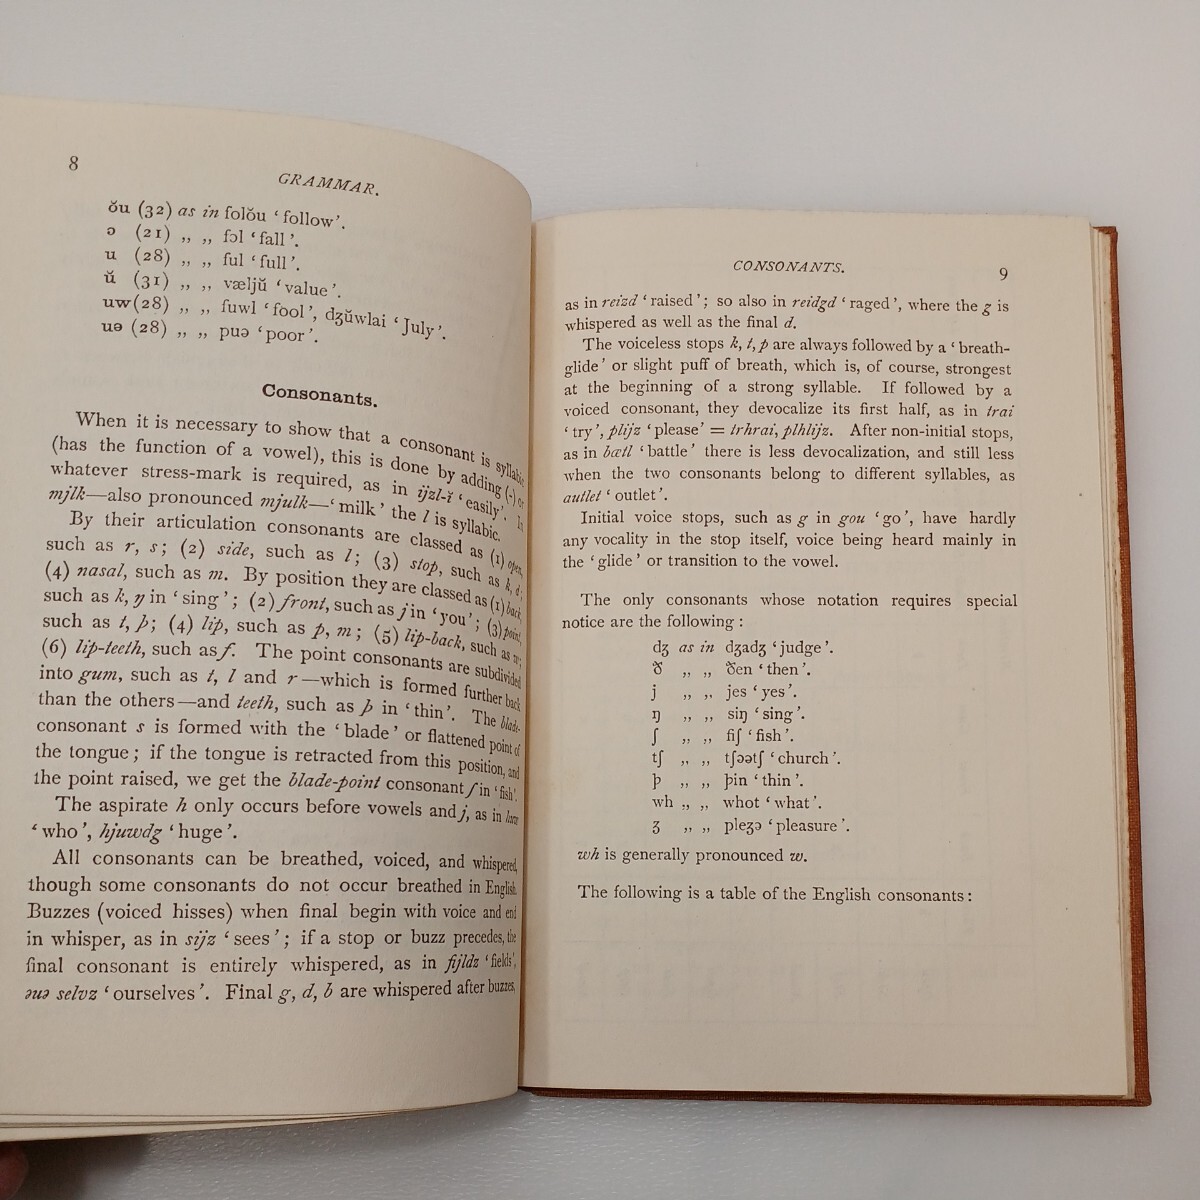 zaa-557♪A Primer Of Spoken English (1890) ハードカバー 英語版 Henry Sweet (著)Oxford　at clarendon press 1932年